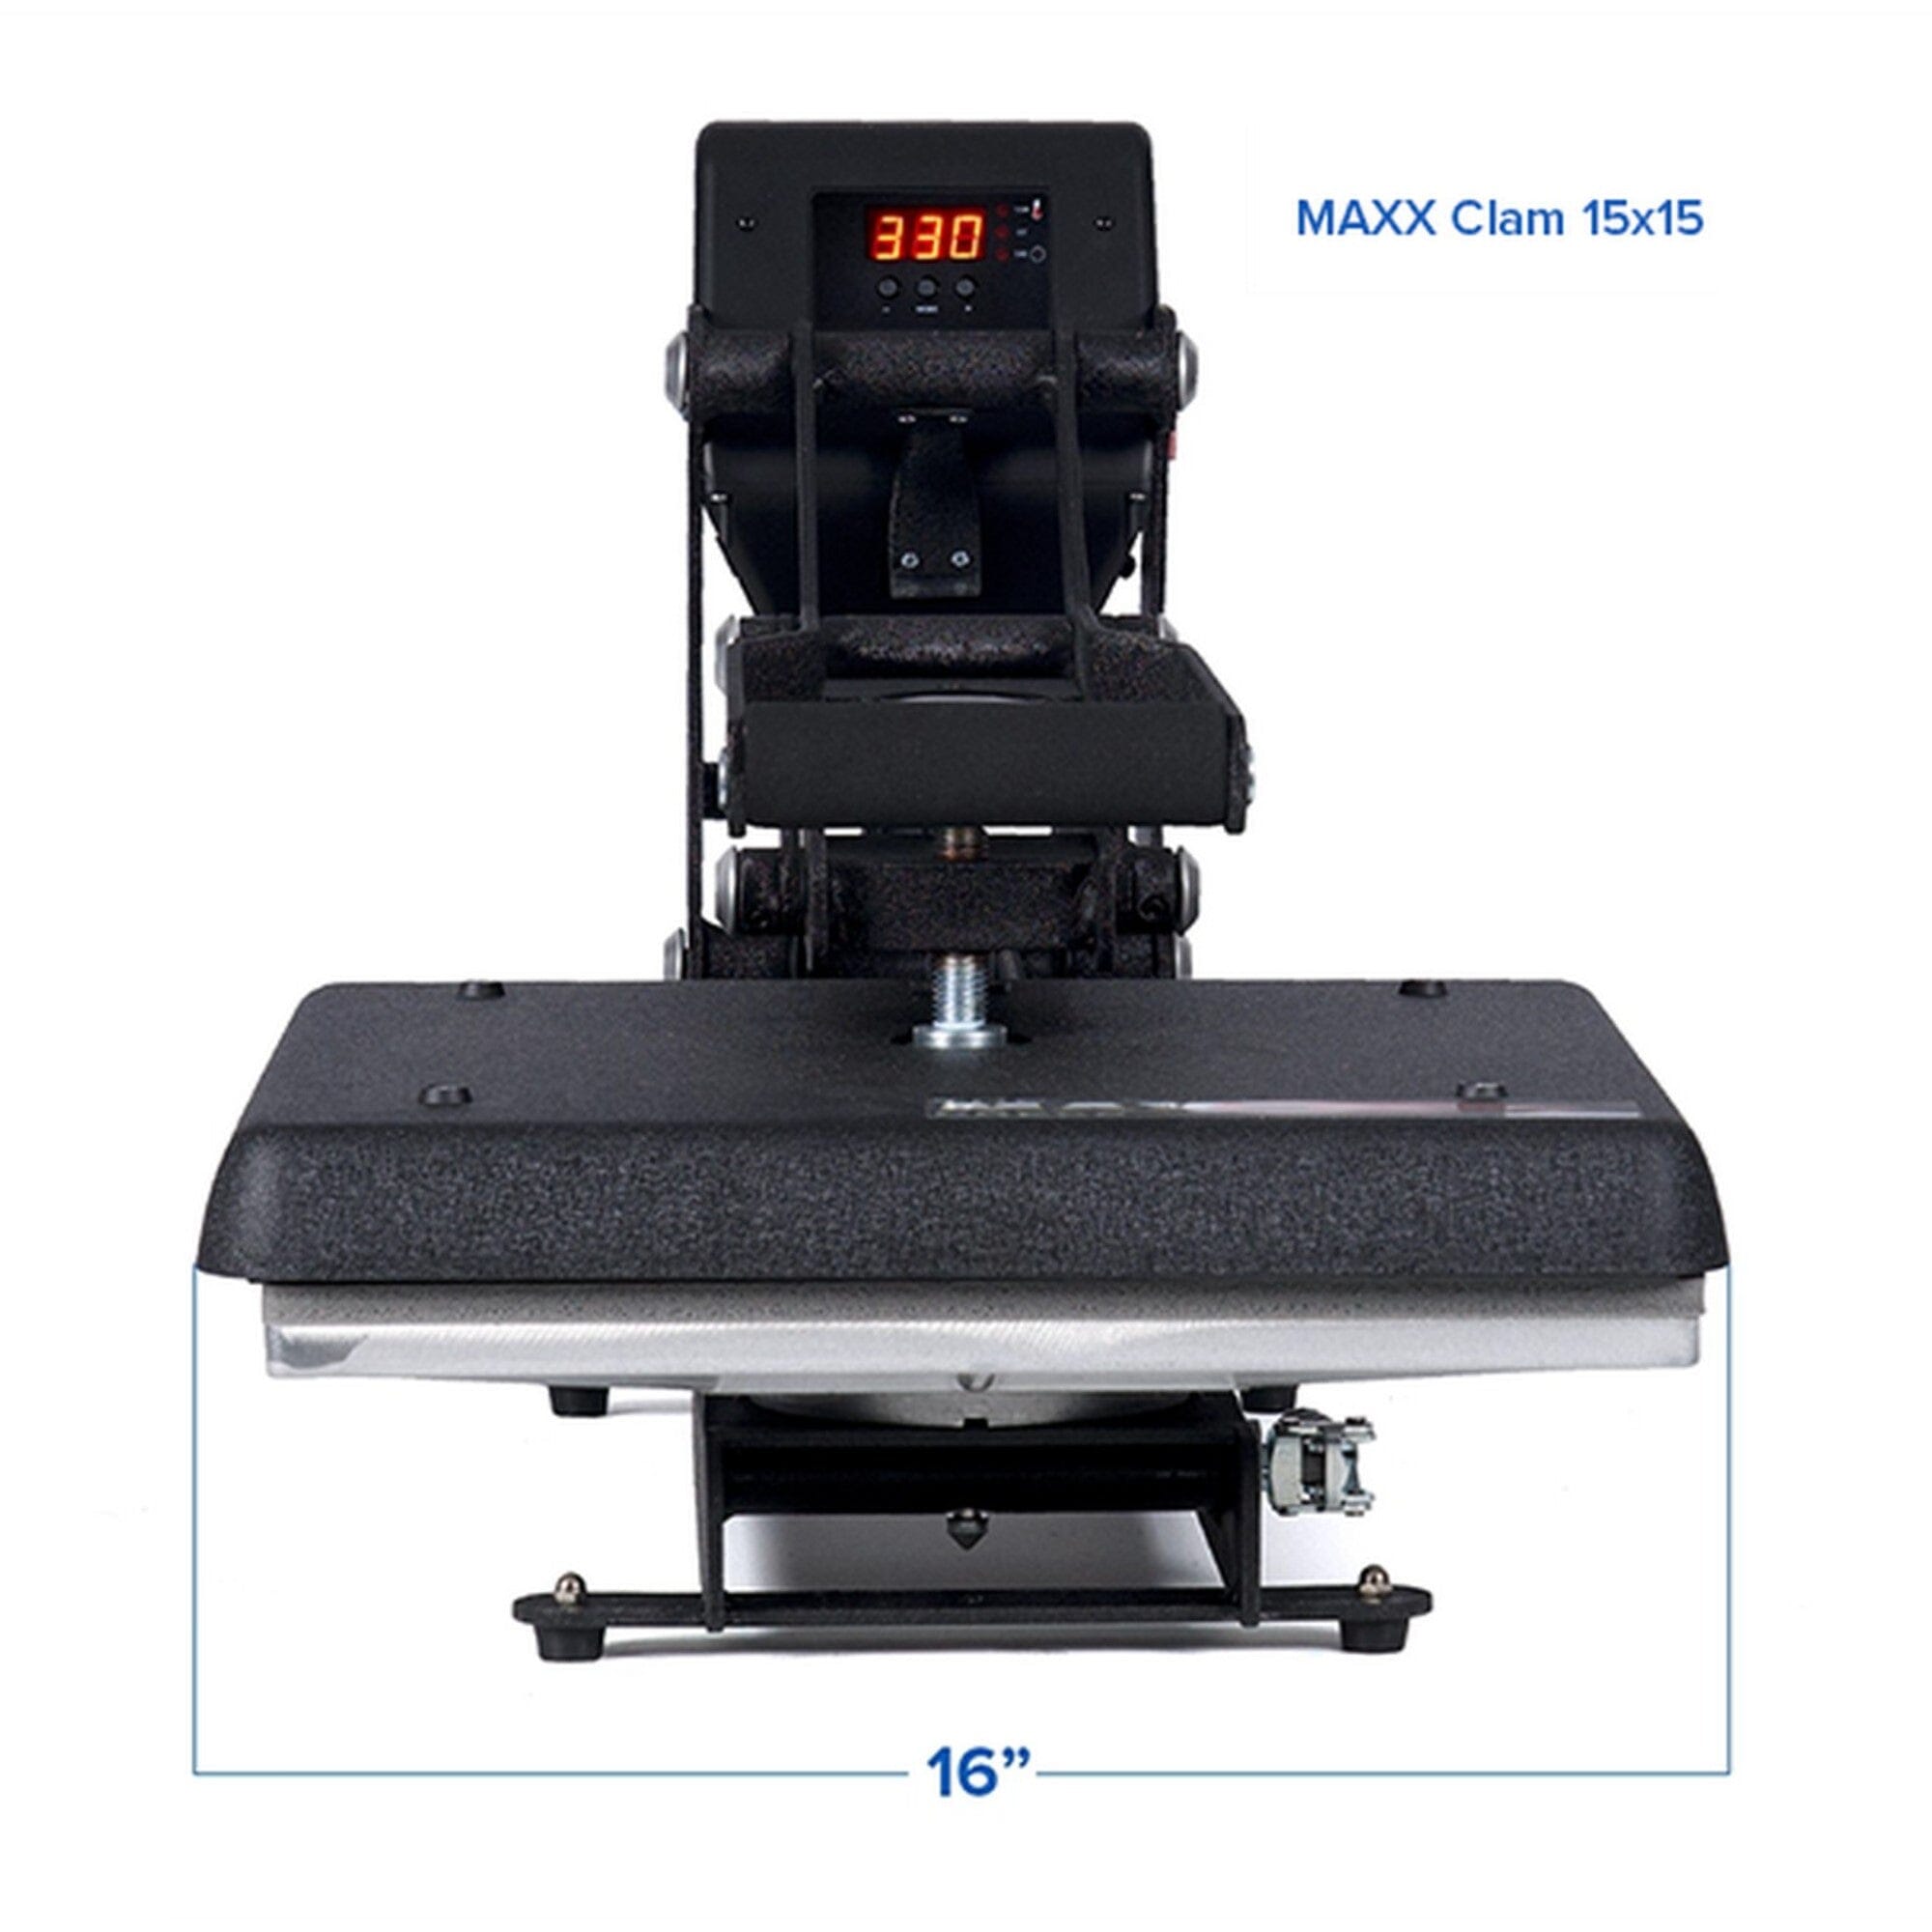 Hotronix Maxx 15x15 Clam Heat Press